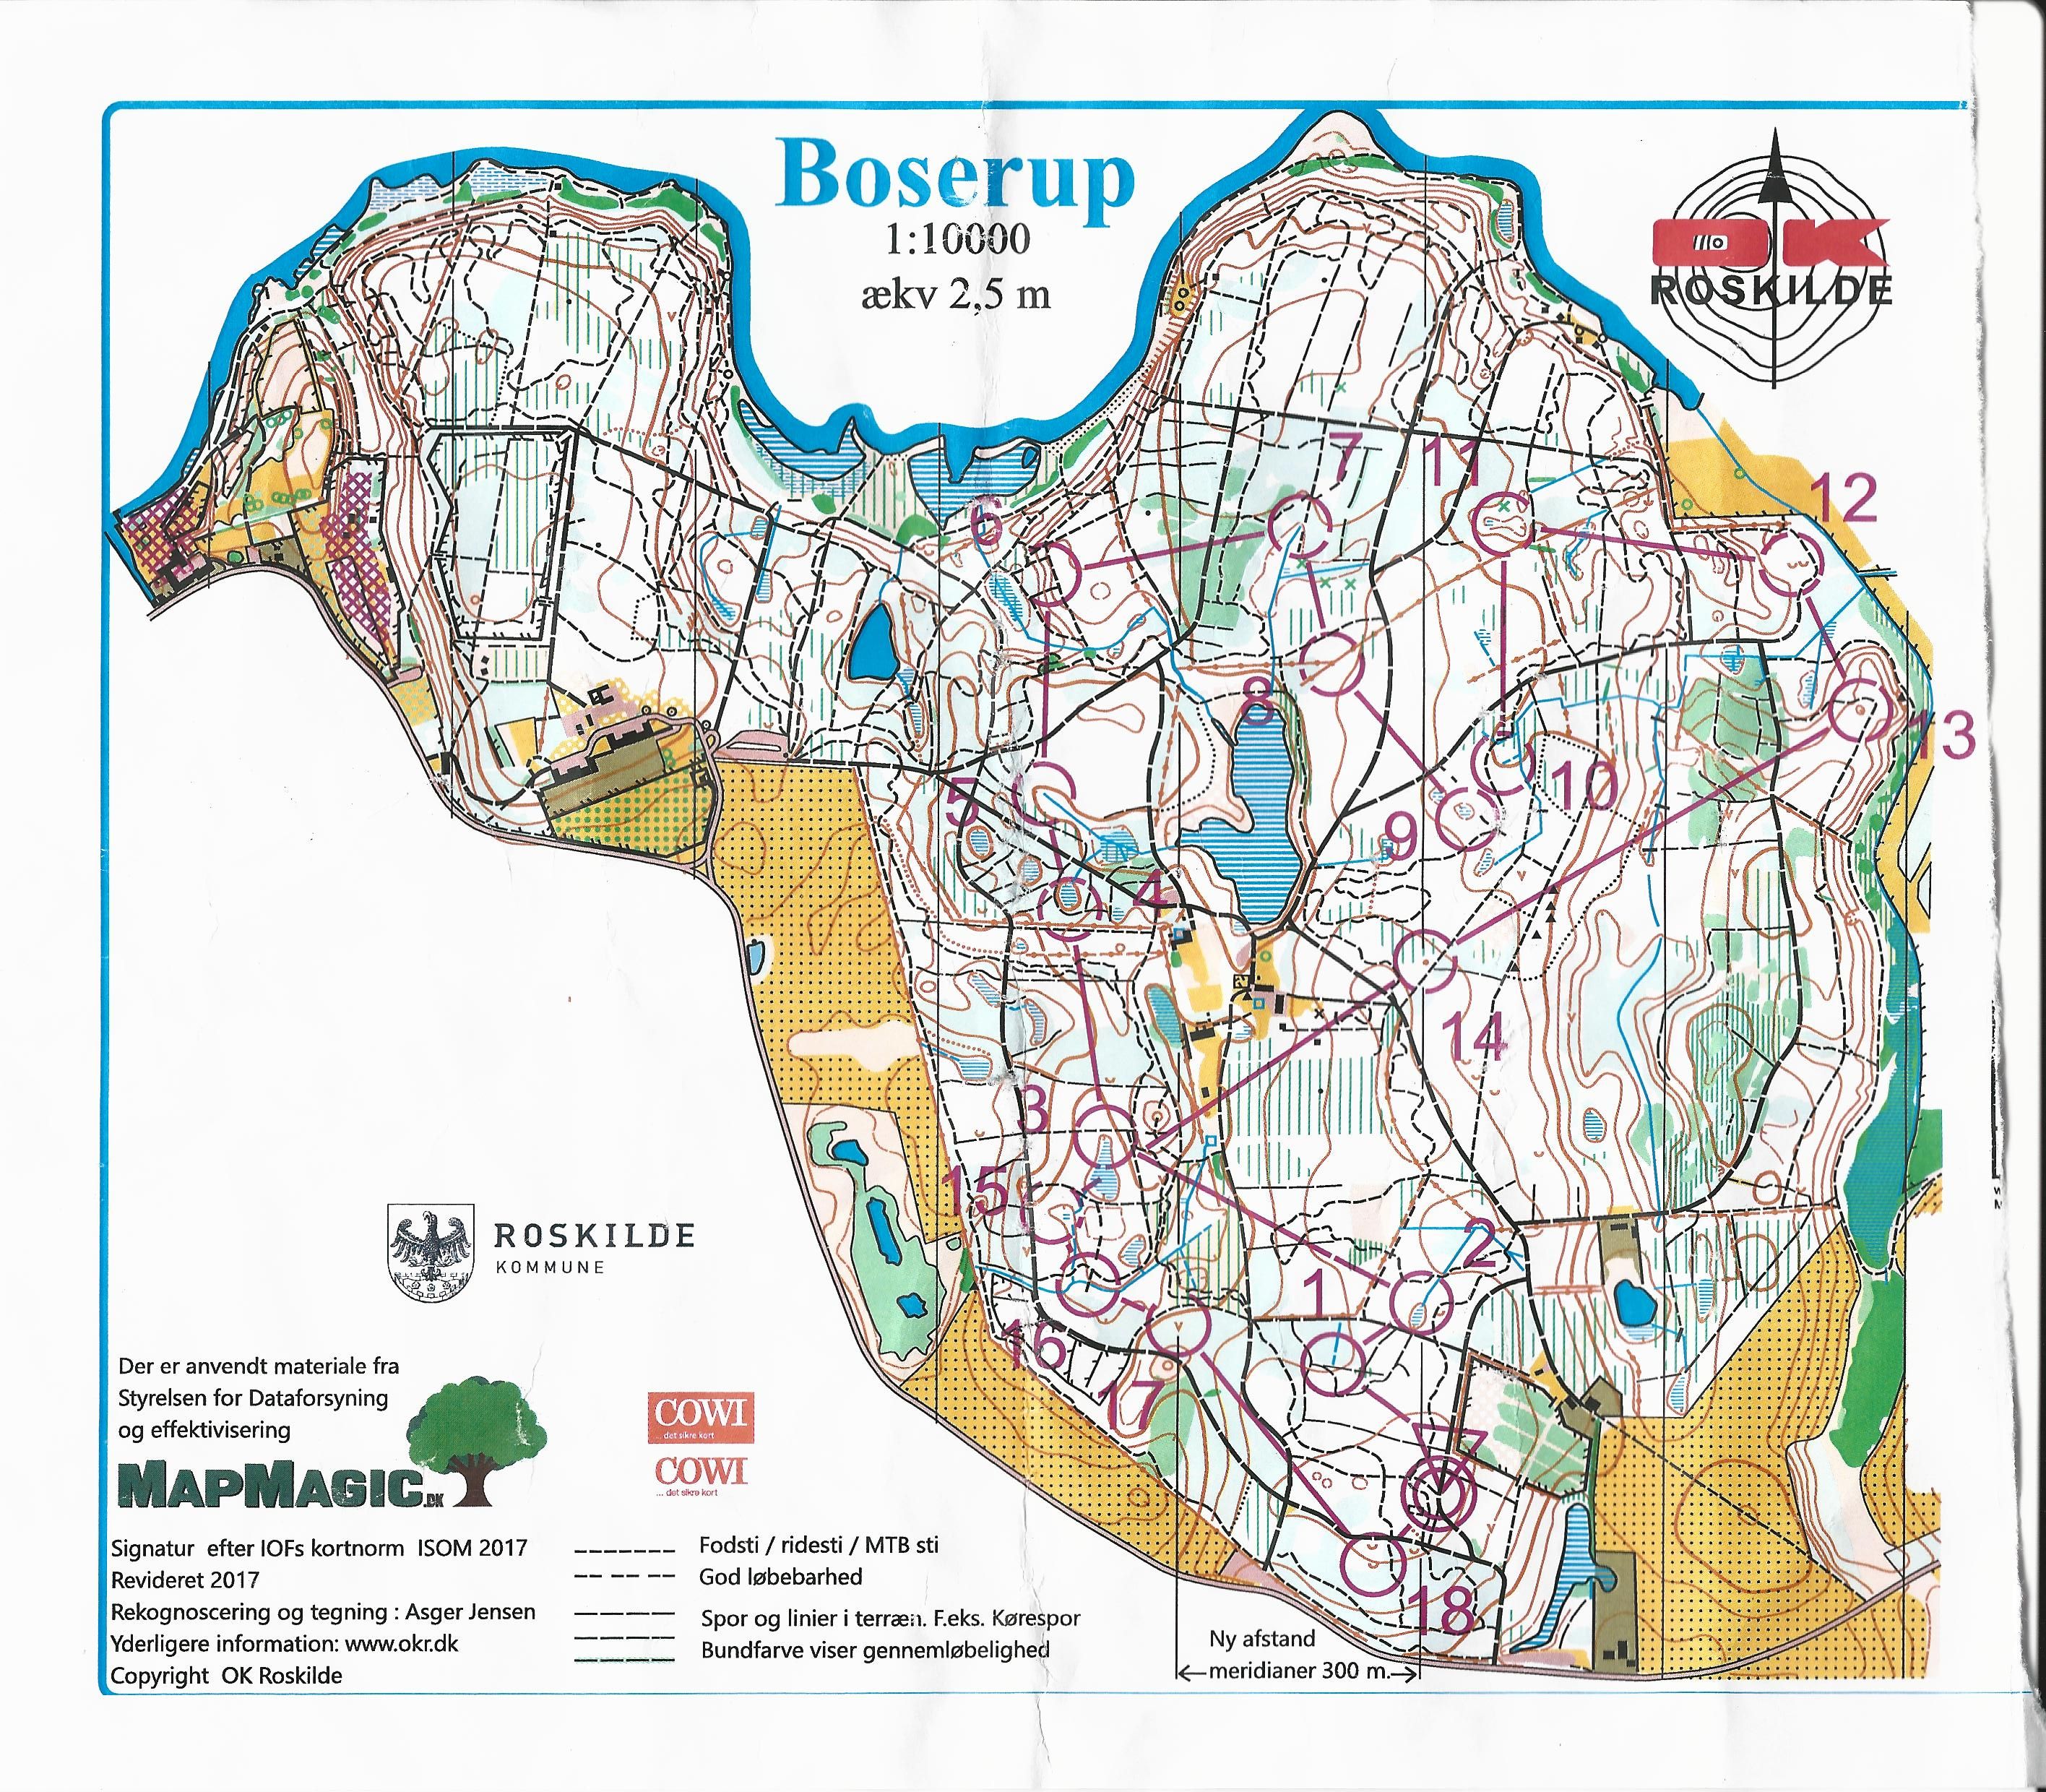 Mellemdistance-træning, Boserup (24.05.2021)